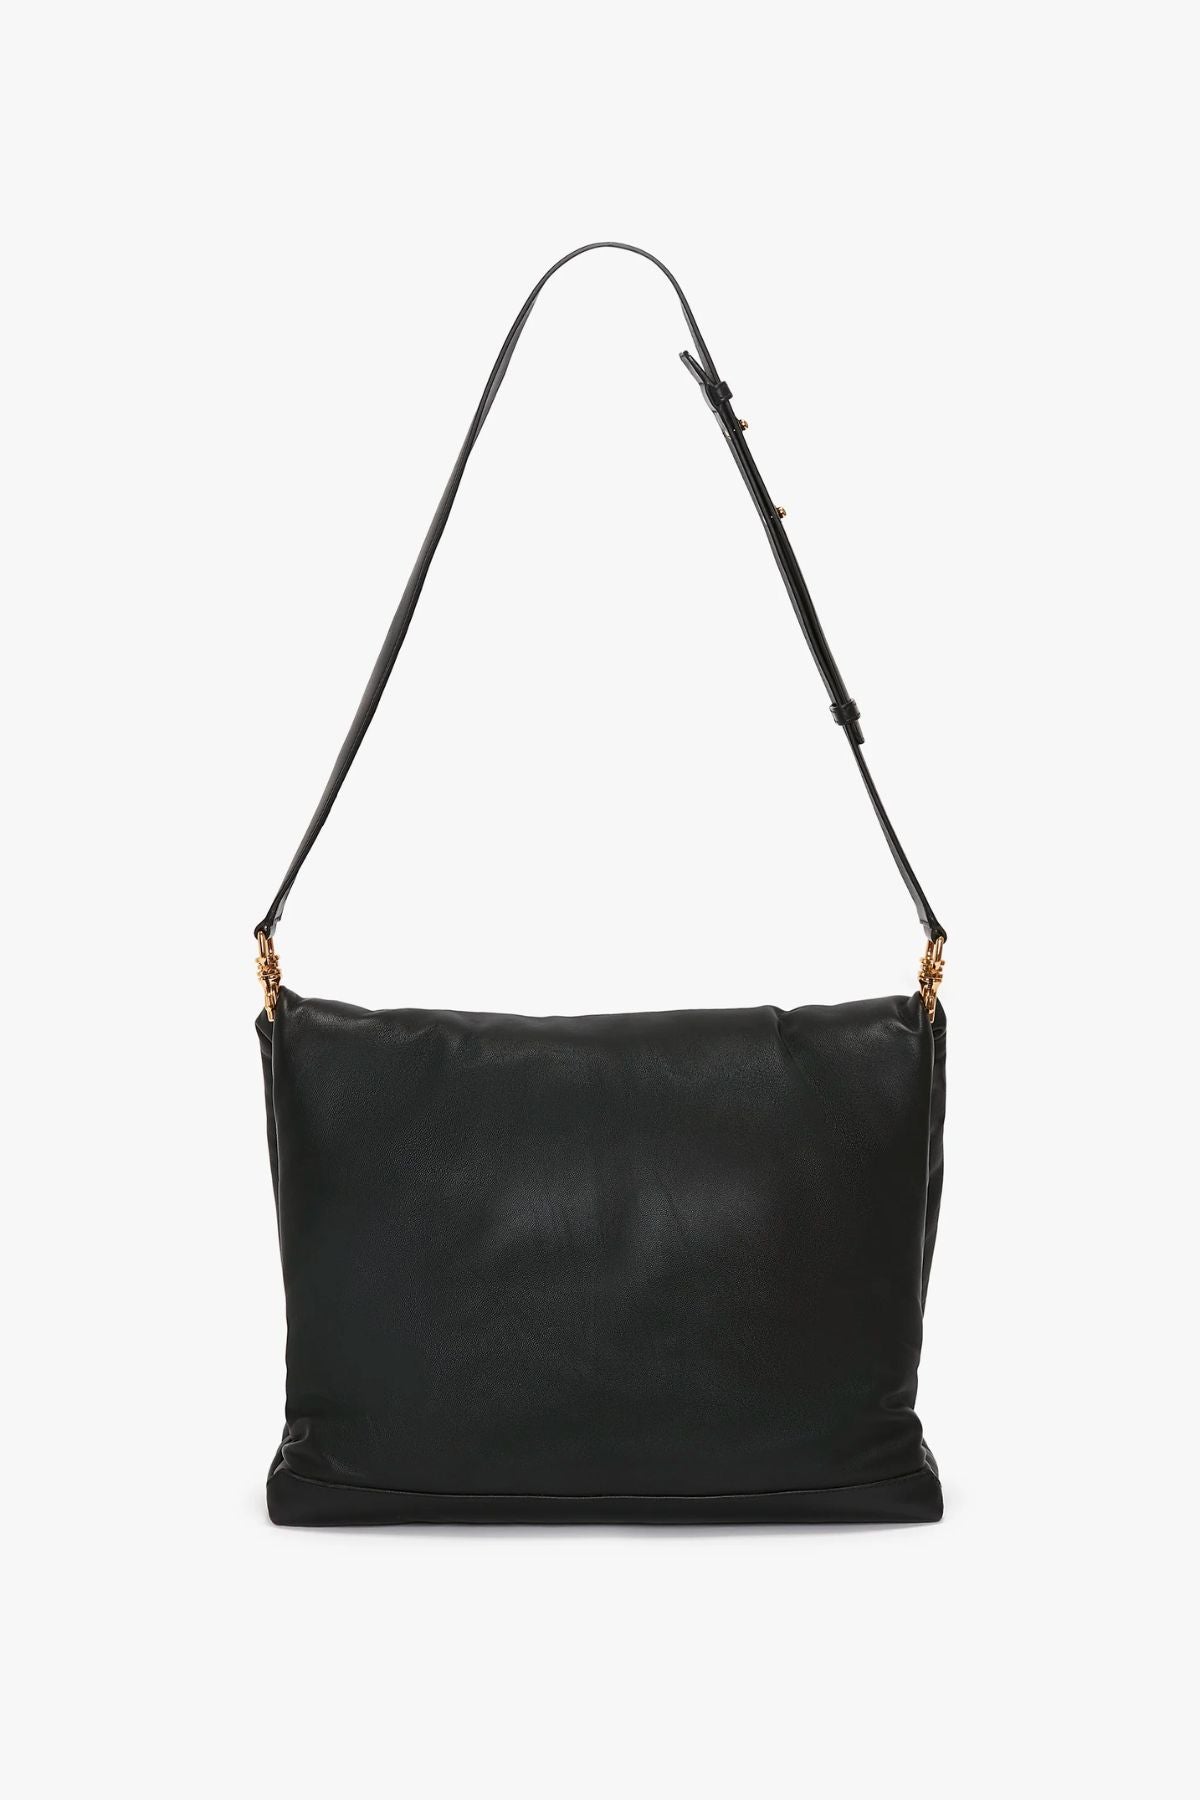 Victoria Beckham Puffy Jumbo Chain Pouch Bag - Black